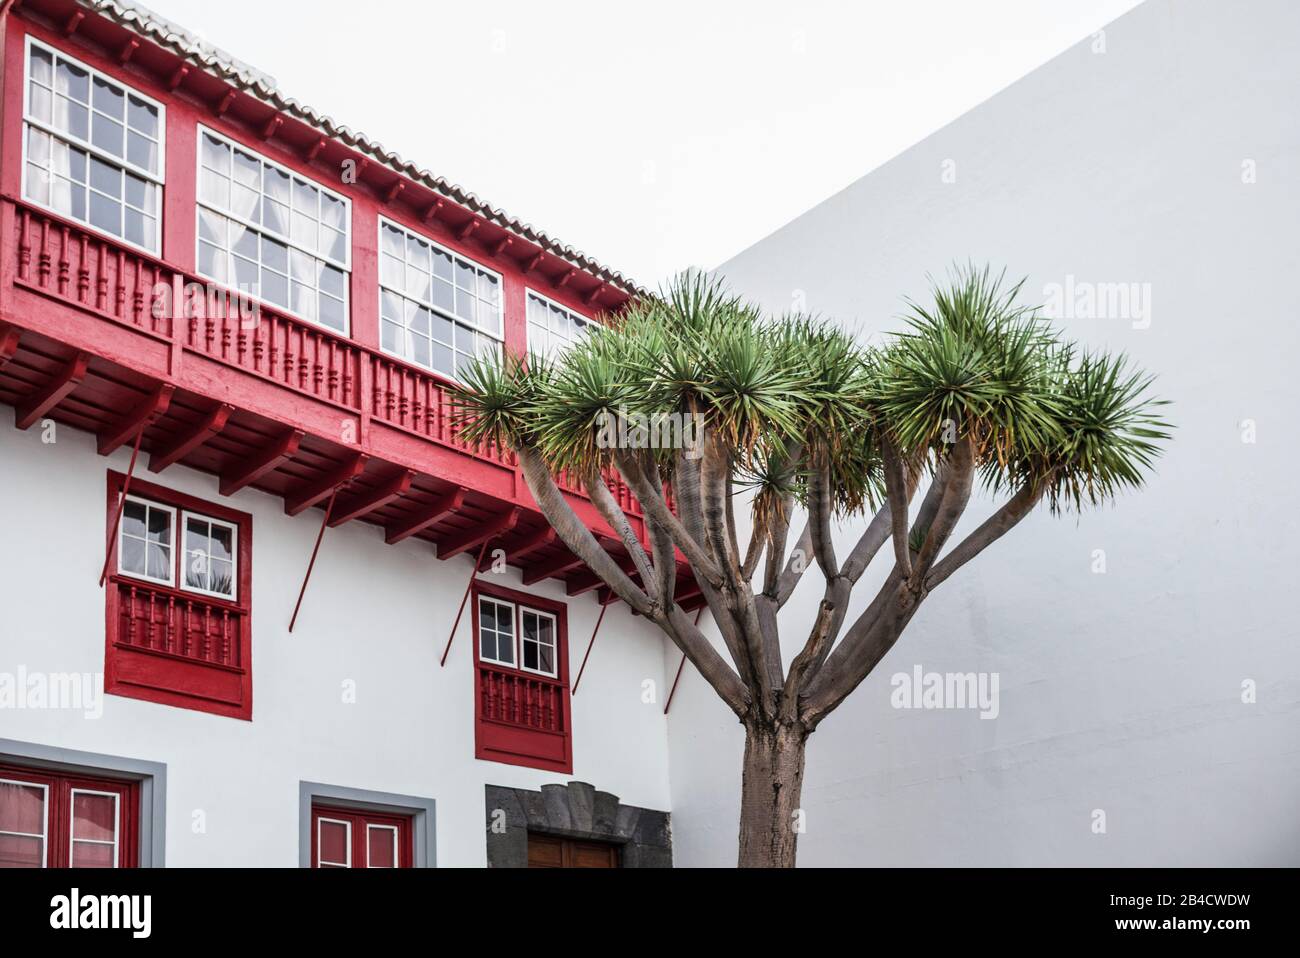 Spain, Canary Islands, La Palma Island, Santa Cruz de la Palma, traditional Canarian house balconies Stock Photo